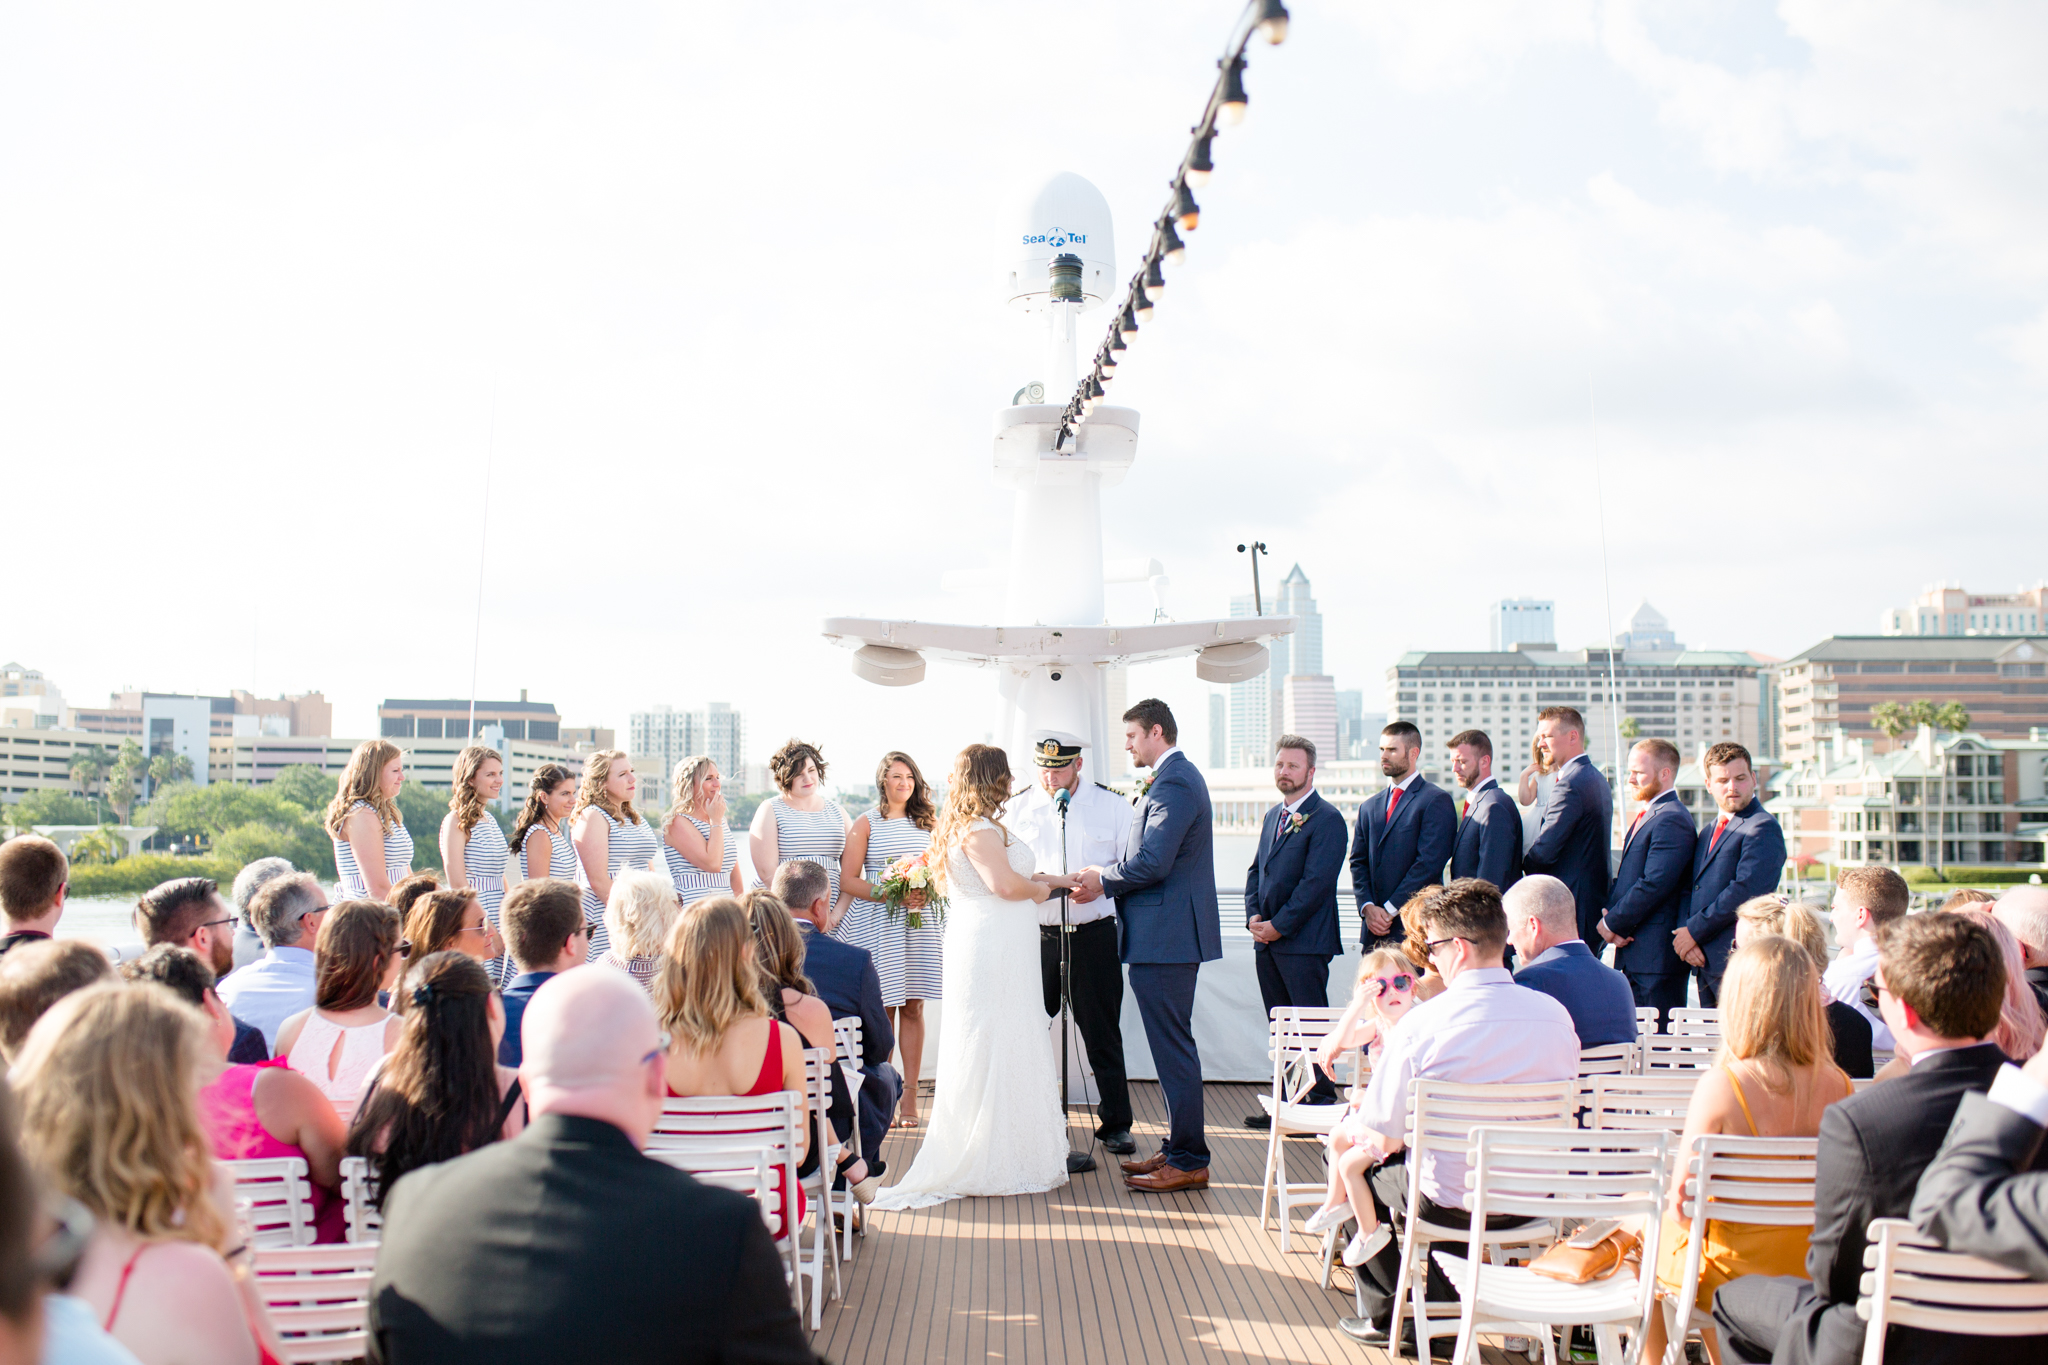 Wedding ceremony on yacht.